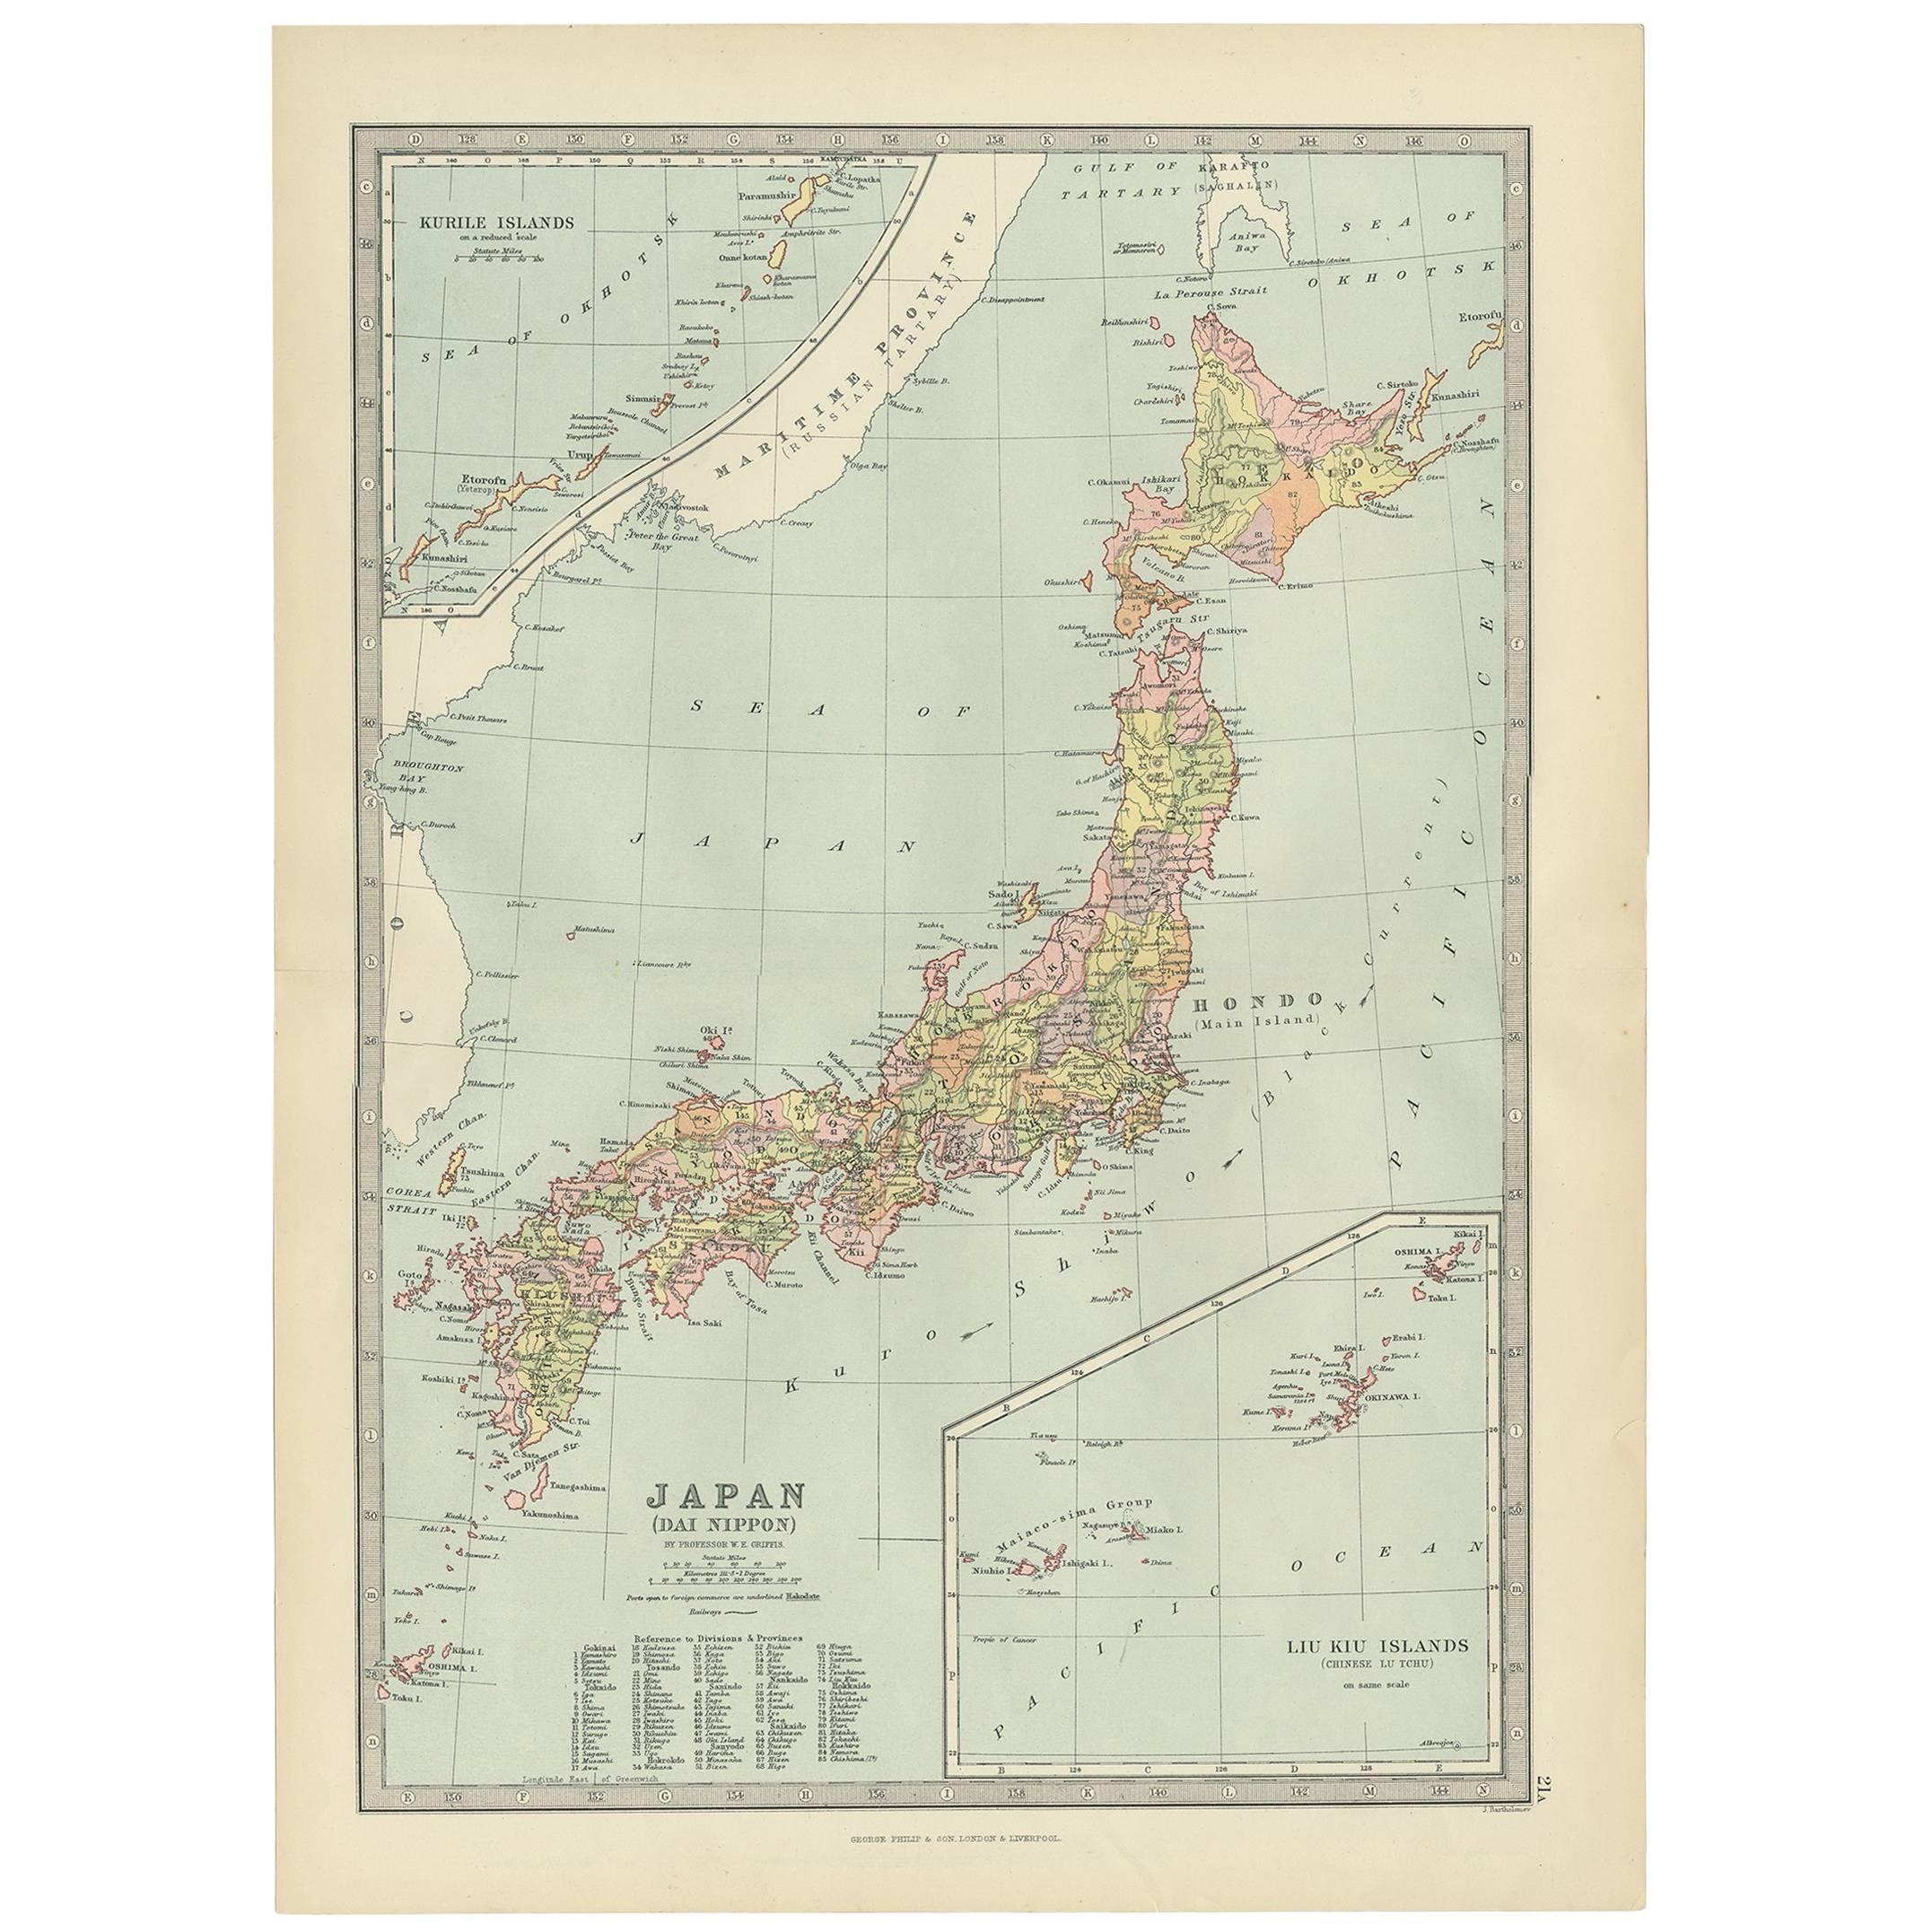 Antique Map of Japan, the Kurile Islands and Liu Kiu Islands, 1886 For Sale